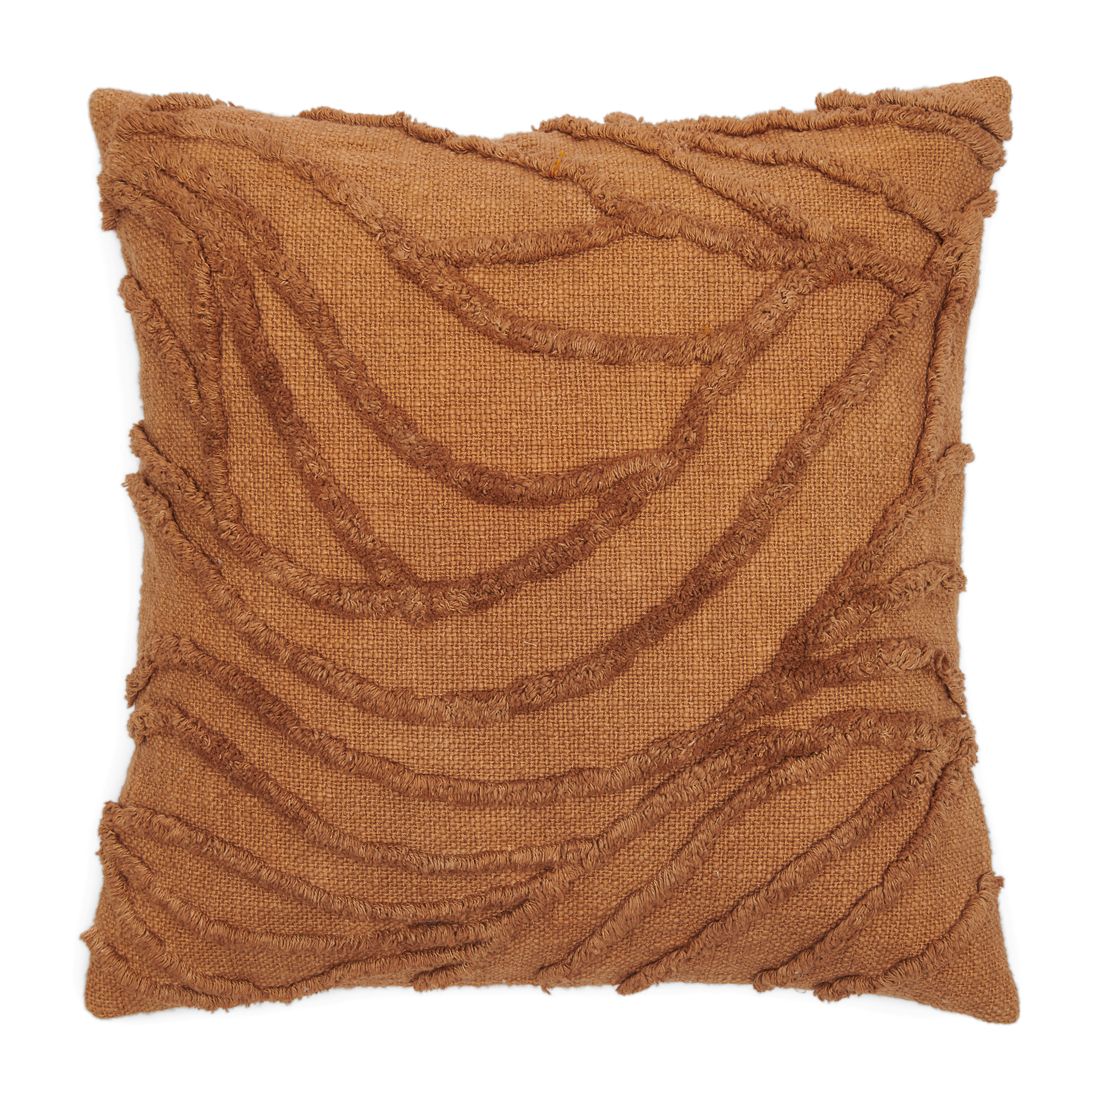 Desert Wave Pillow Cover Sand